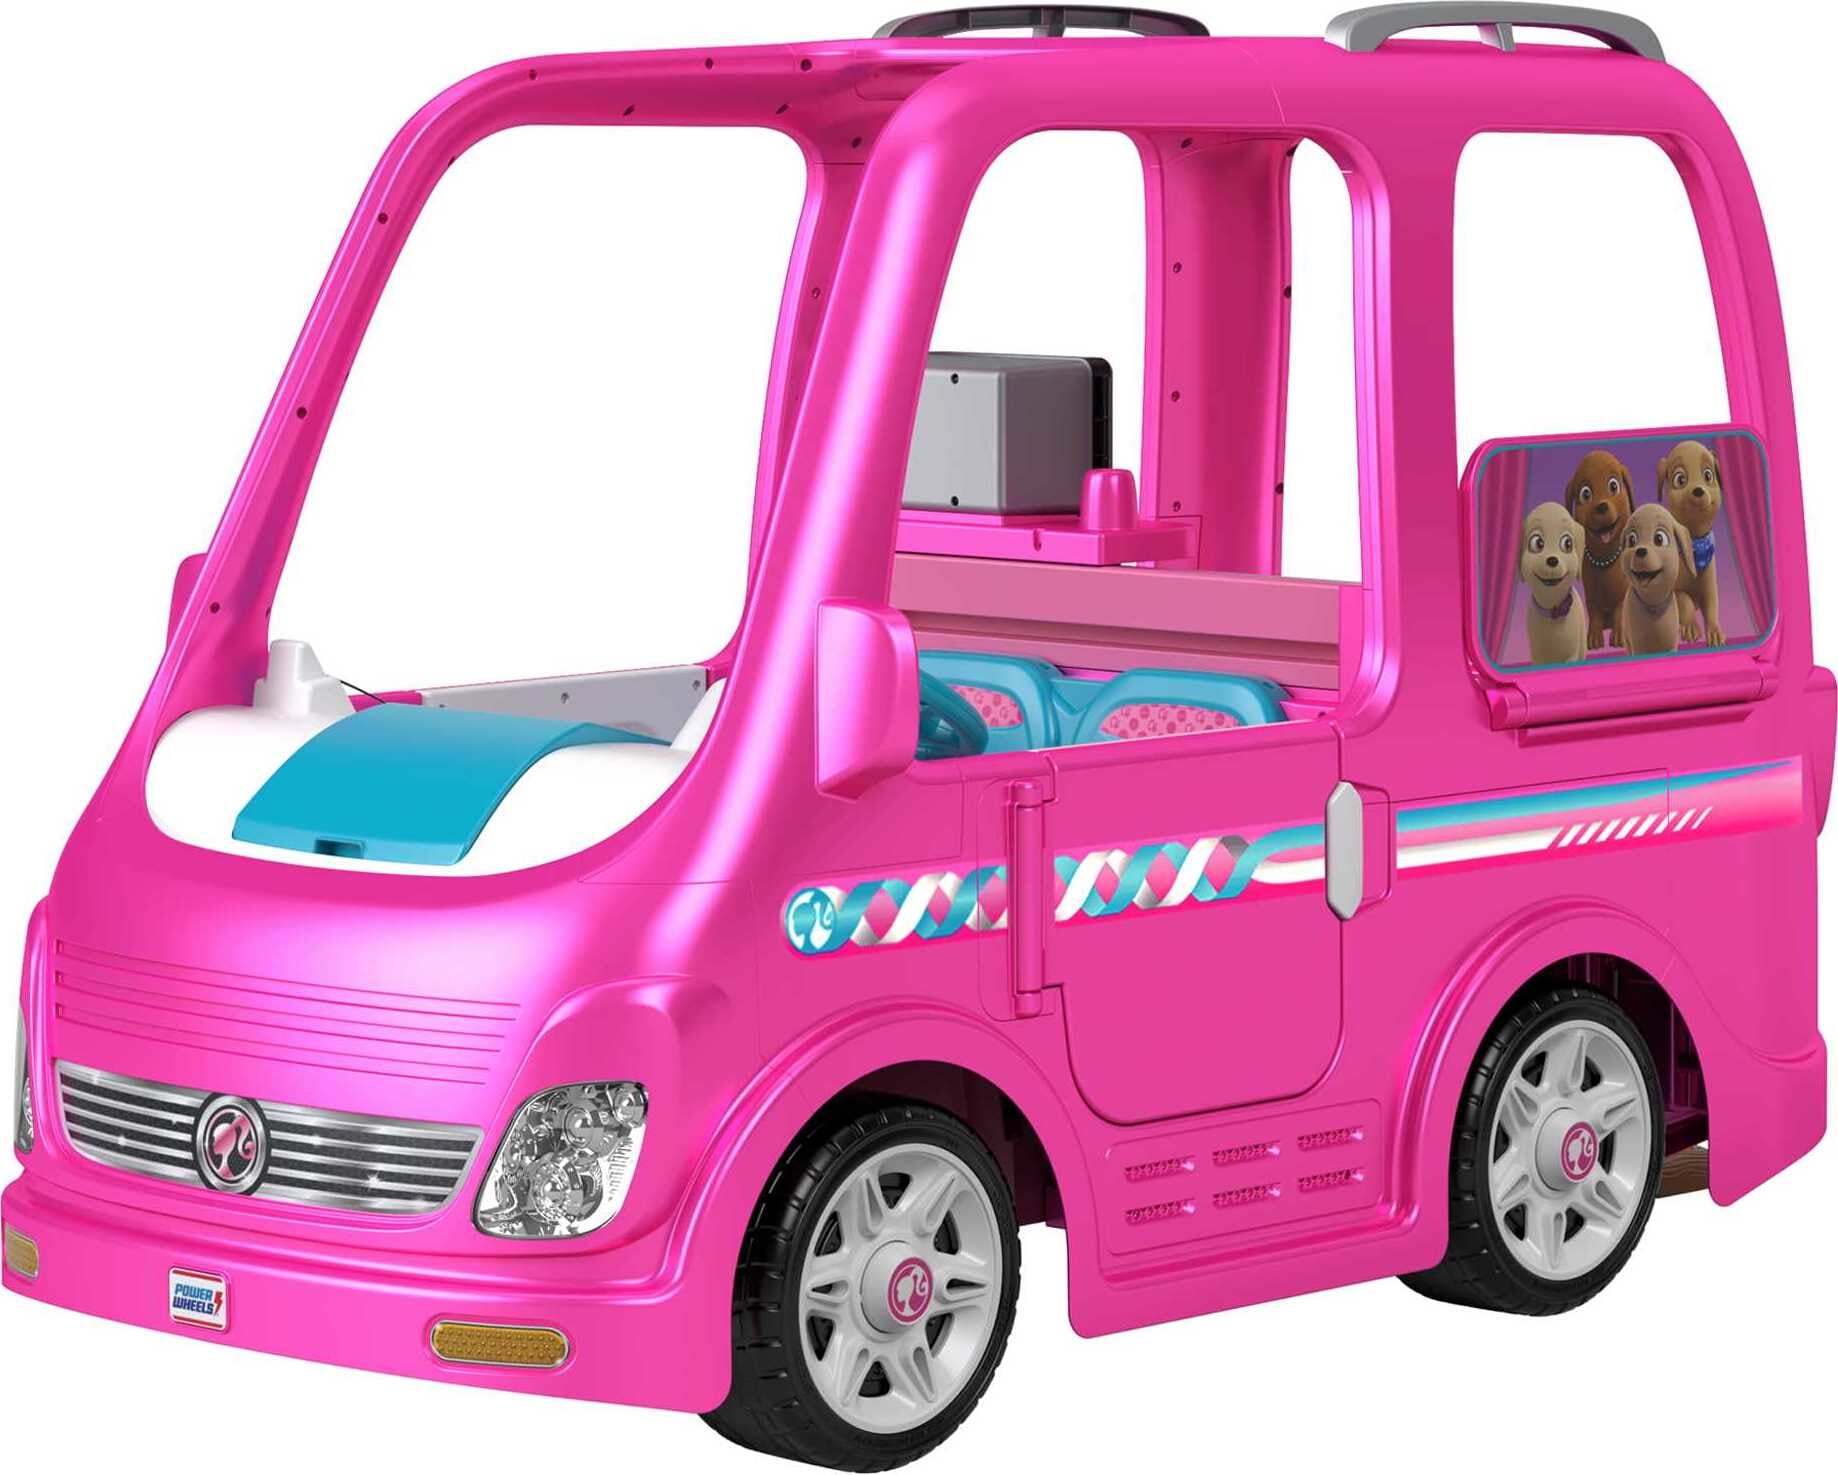 udvande kobling kravle Power Wheels Barbie Dream Camper Battery-Powered Ride-On with Music Sounds  & 14 Accessories, 12V - Walmart.com